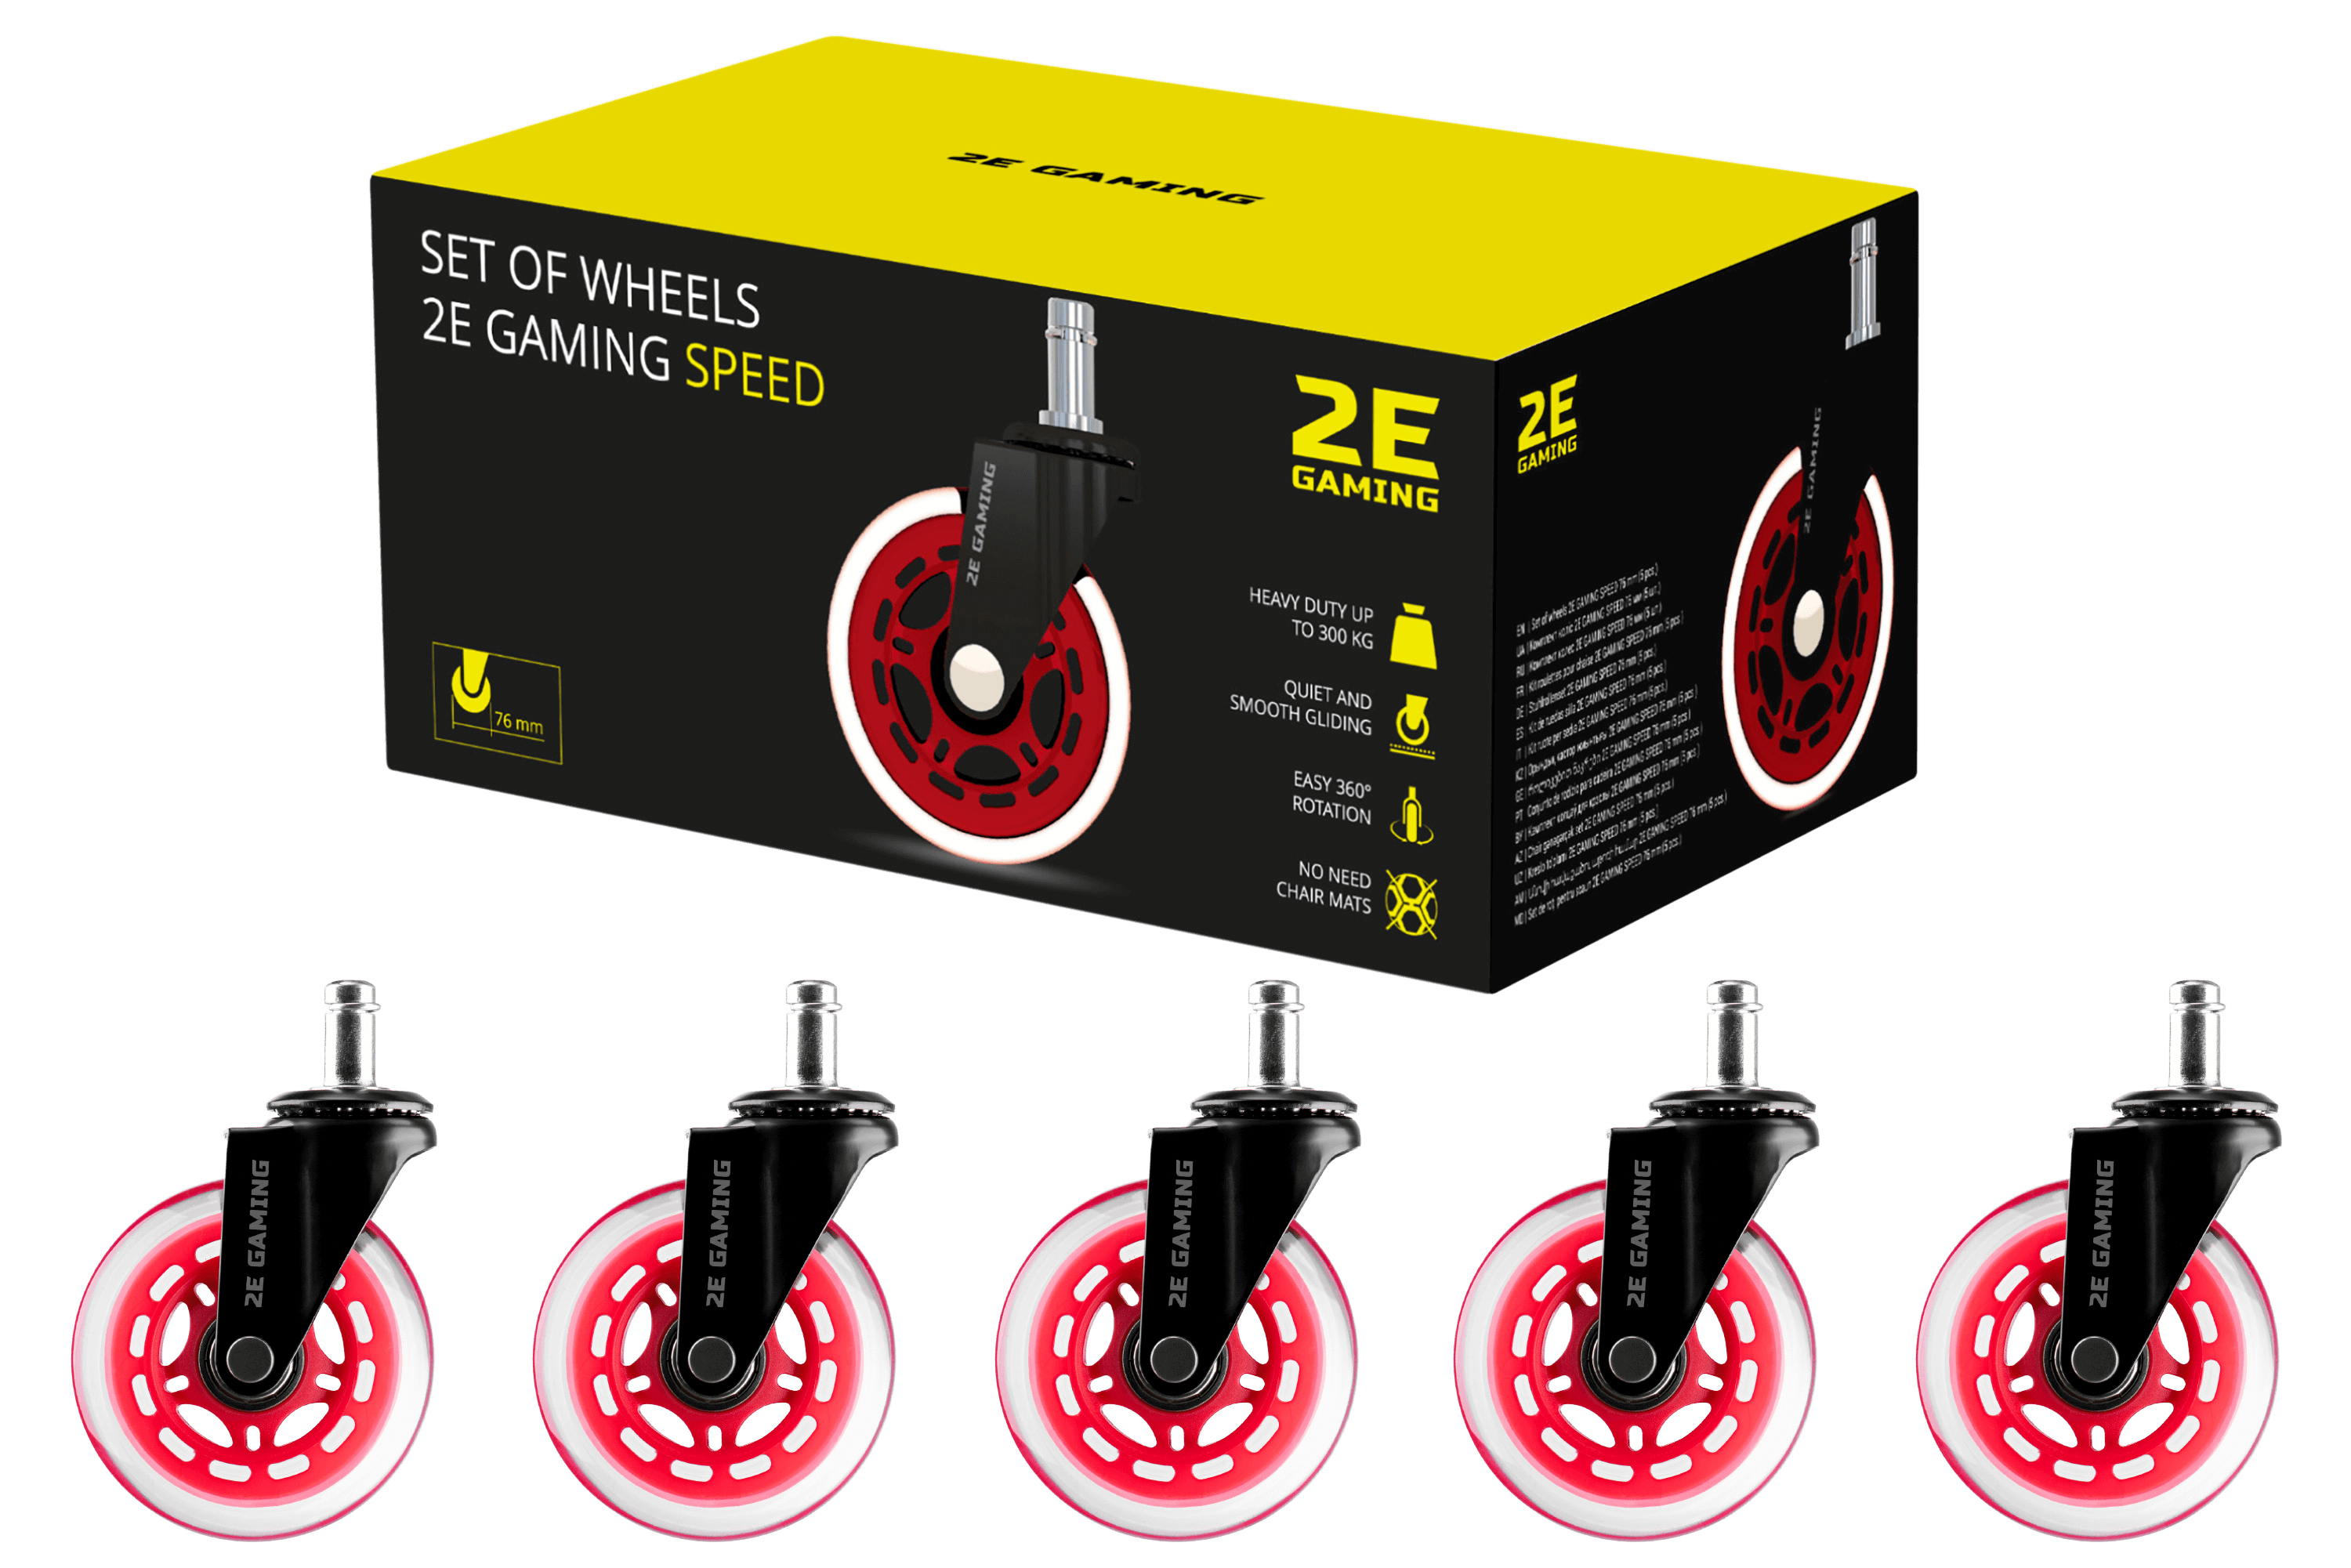 Комплект колес 2e Gaming Speed 76 мм (5 шт.) Red. 2e-mghsl-BK. Набор для гейминга